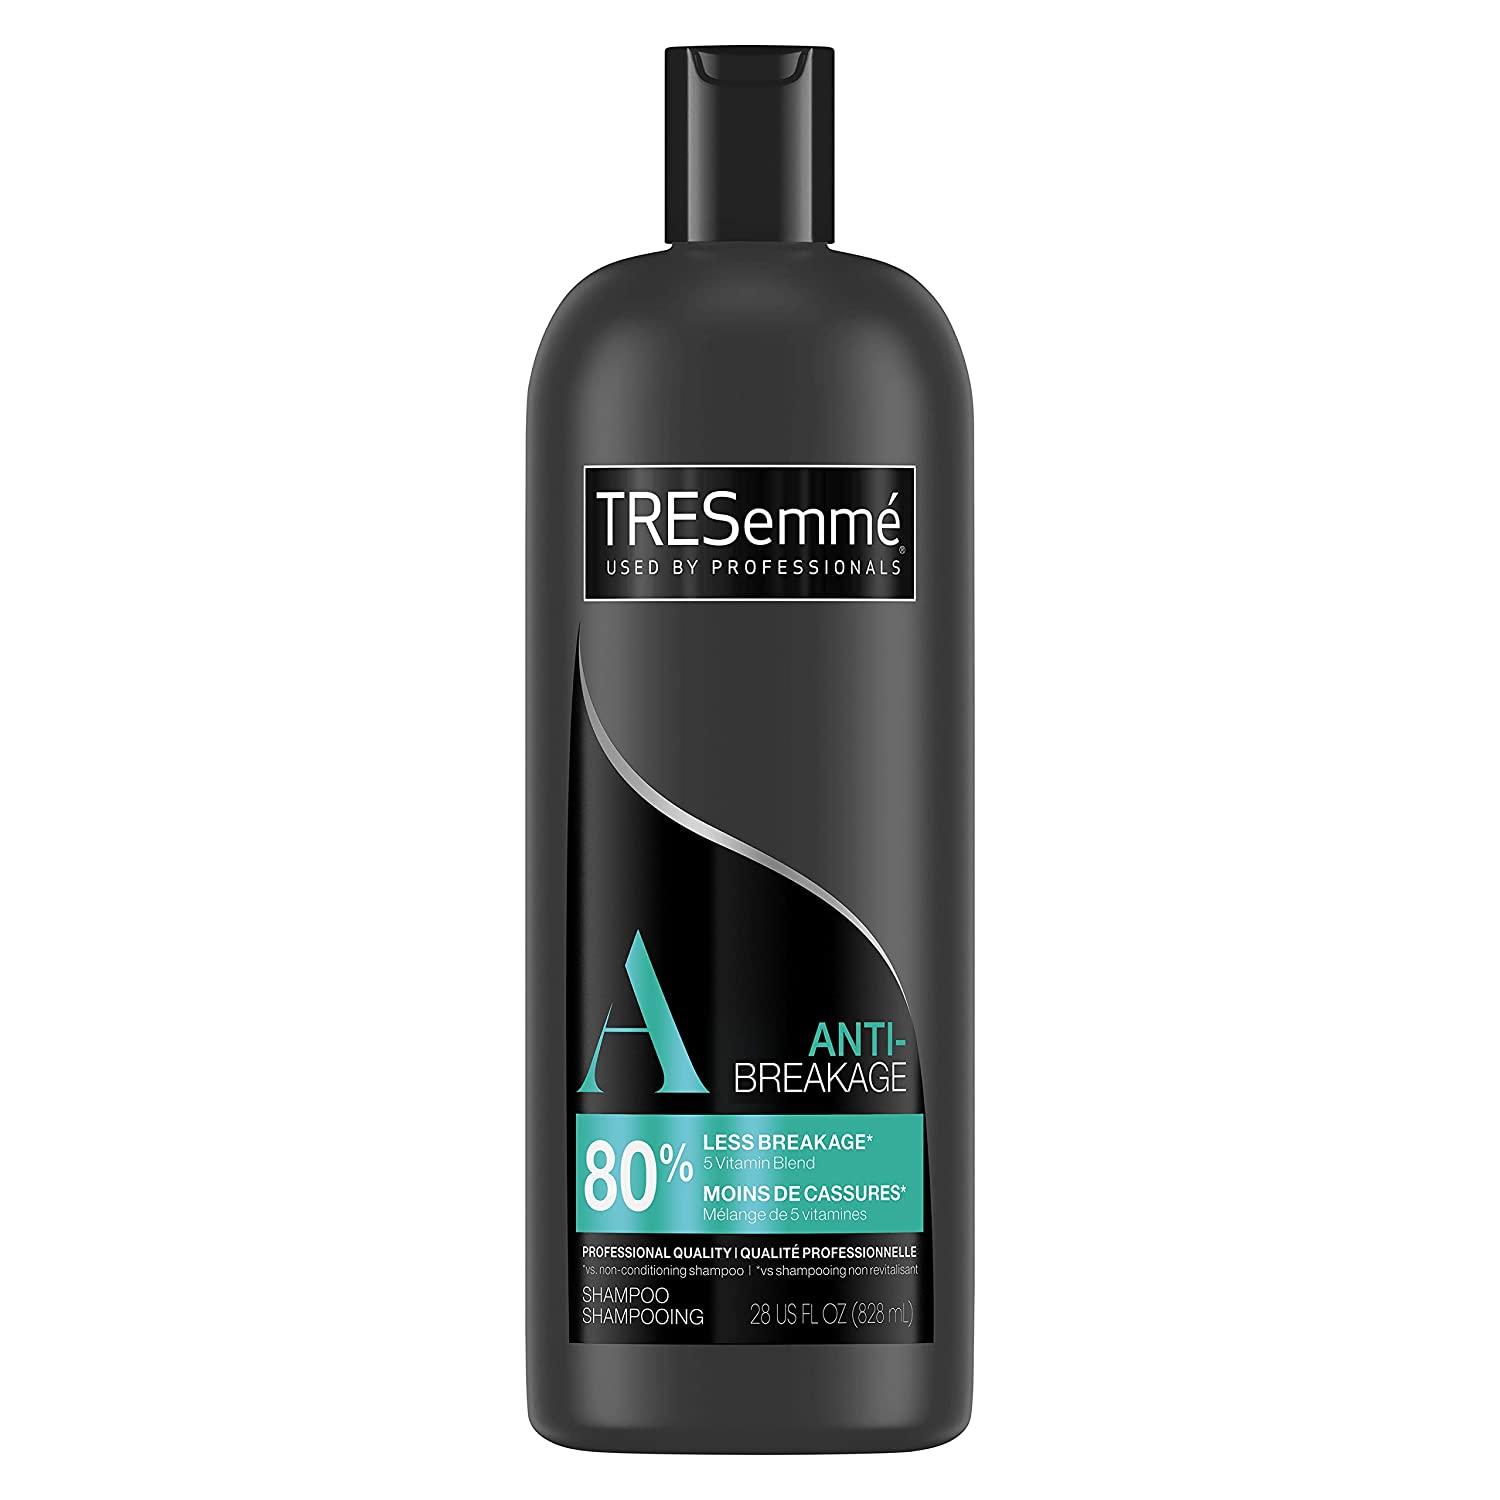 28oz TRESemme Anti-Breakage Shampoo for $2.52 Shipped